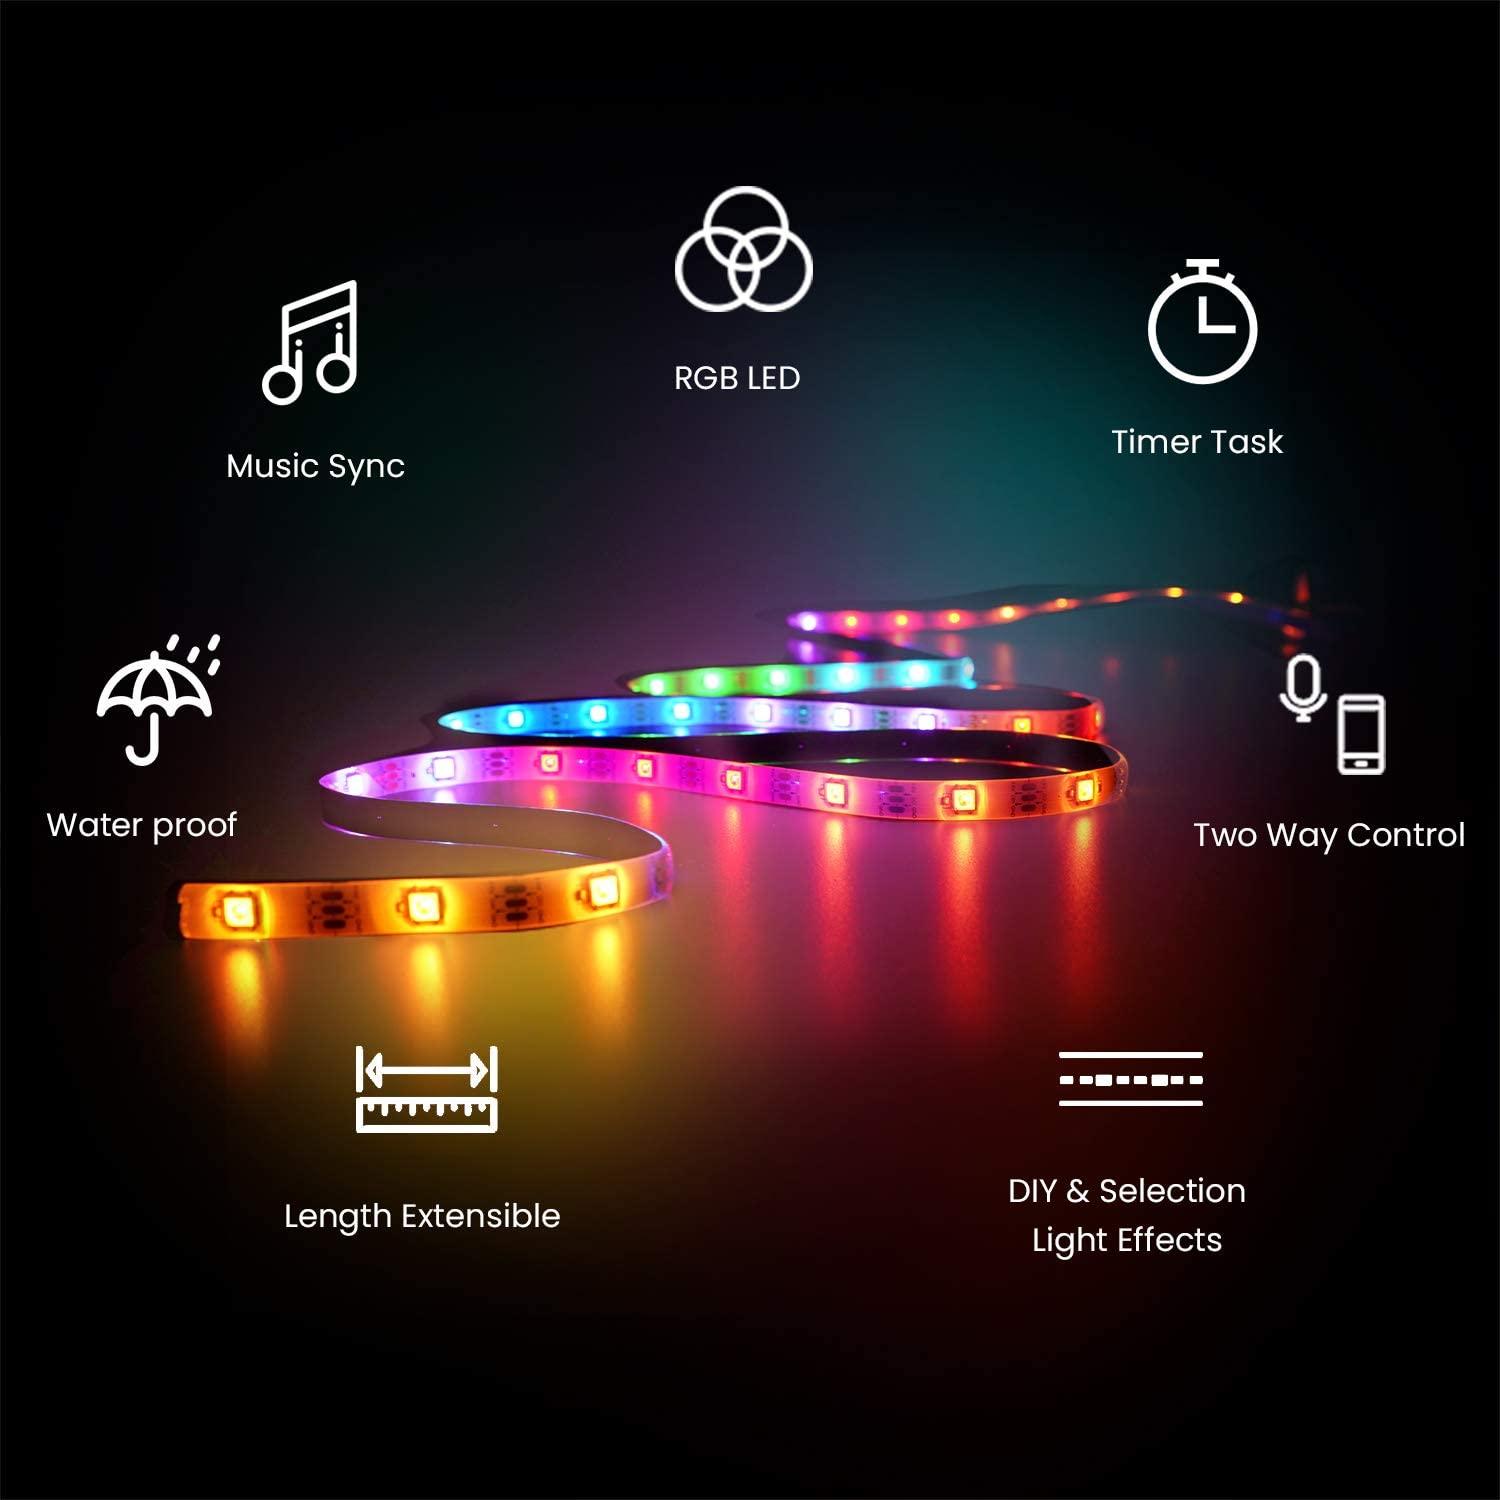 LifeSmart Cololight  Strip Plus WiFi Smart 60 LED Lights